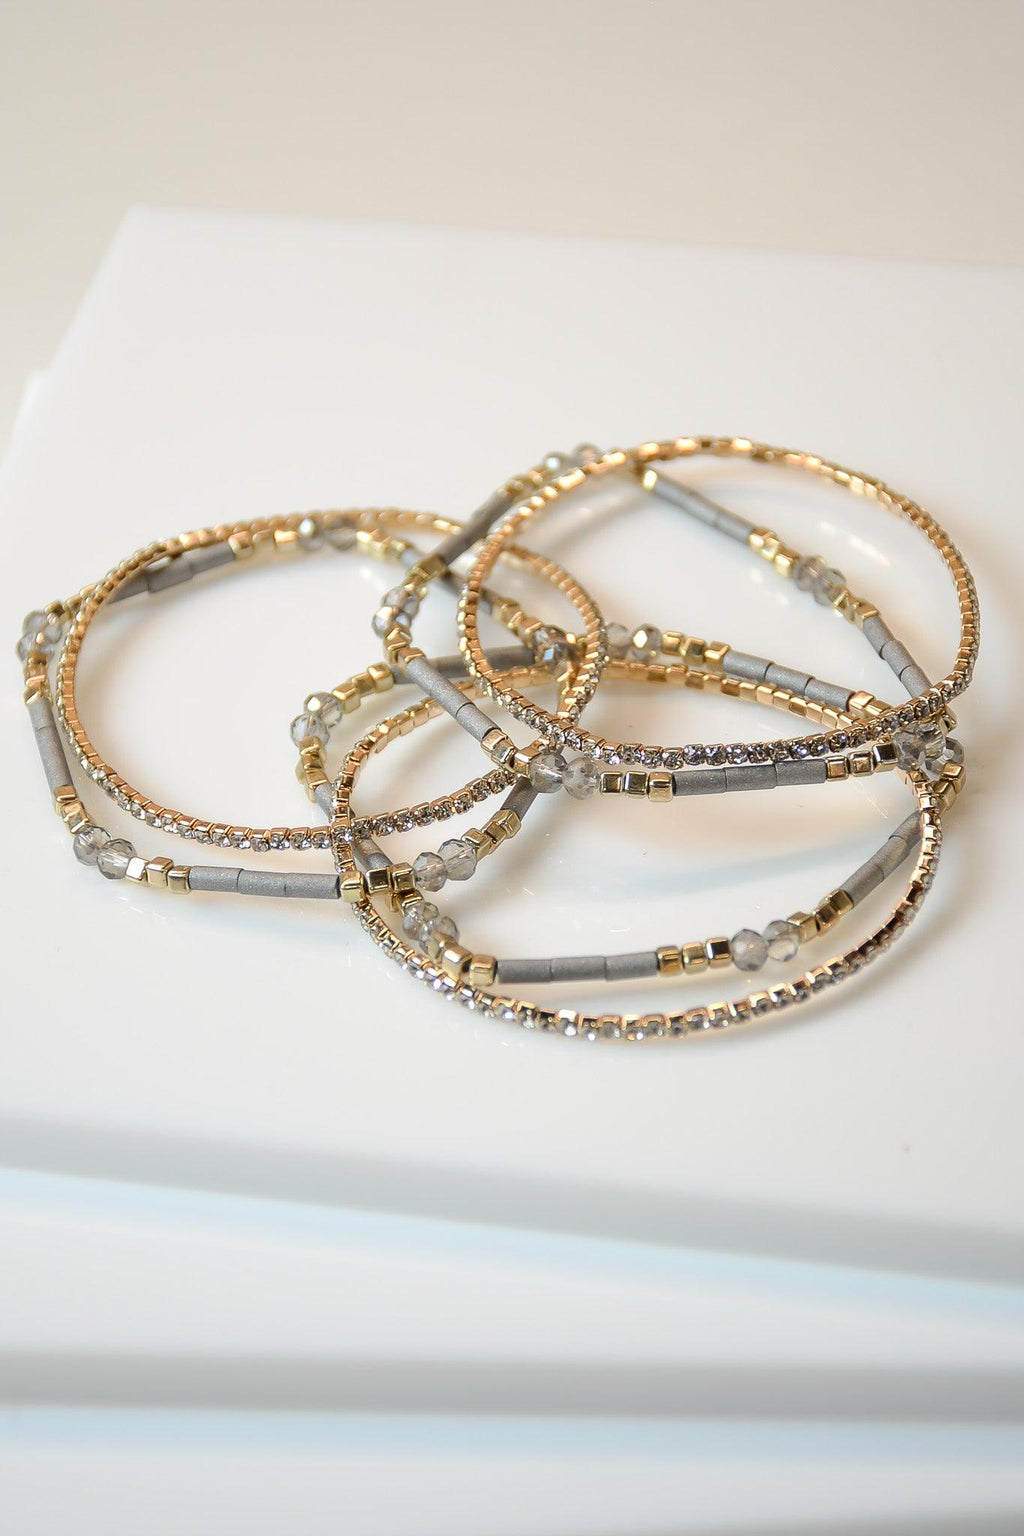 Six Strand Grey & Gold Bracelet - Revir